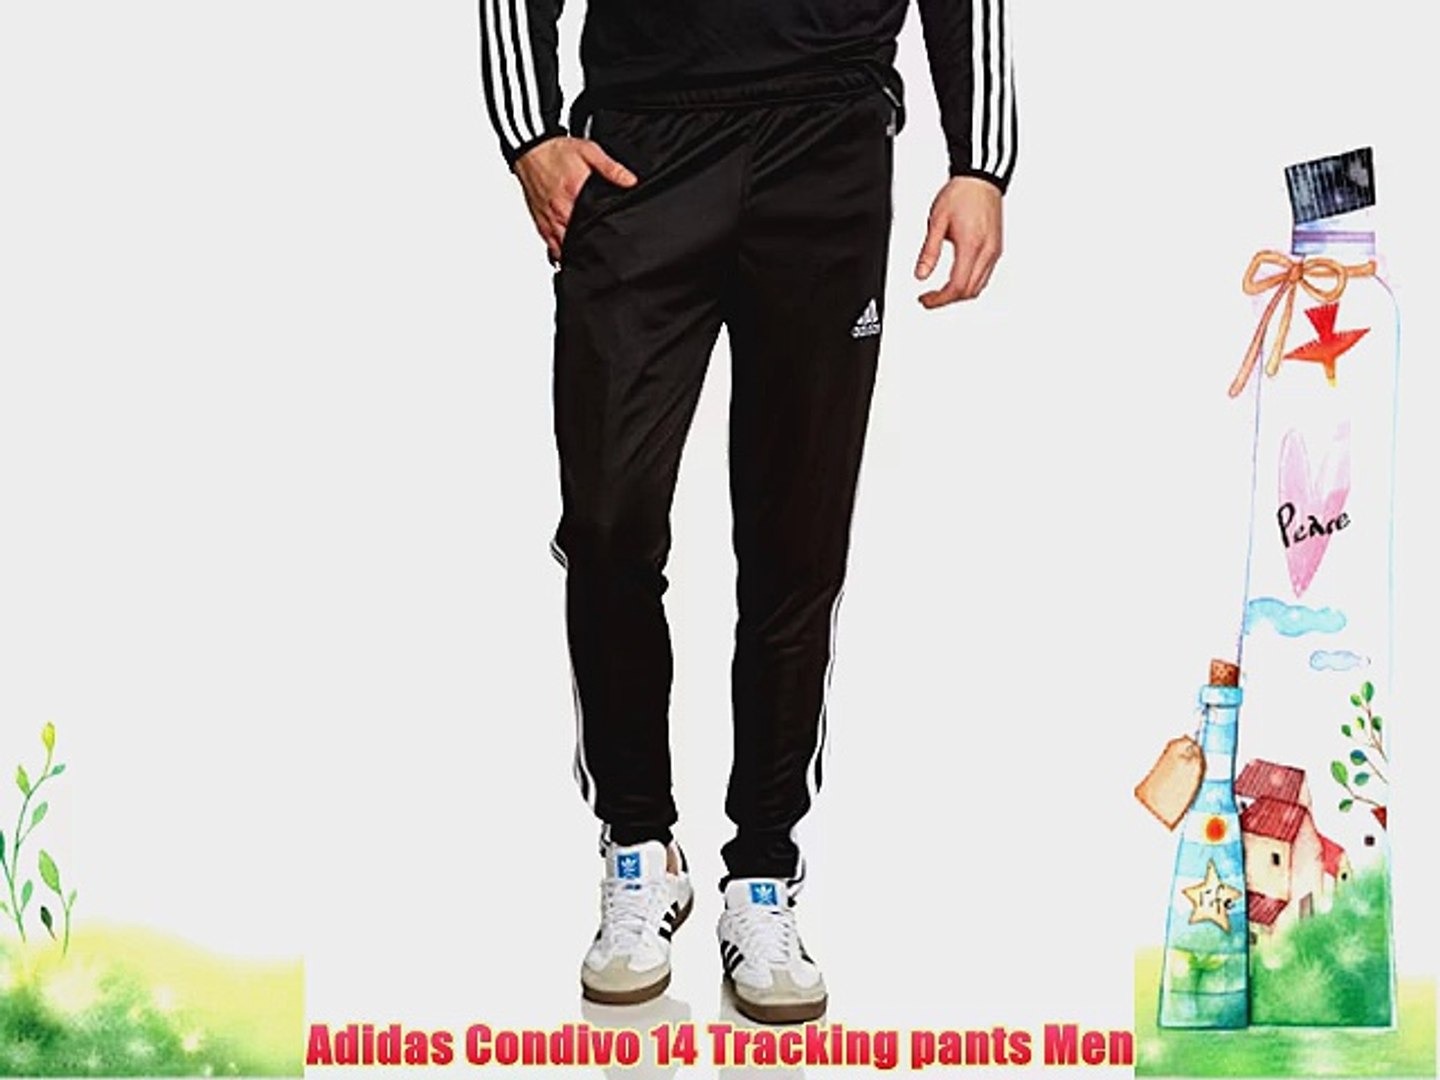 Adidas Condivo 14 Tracking pants Men - video Dailymotion